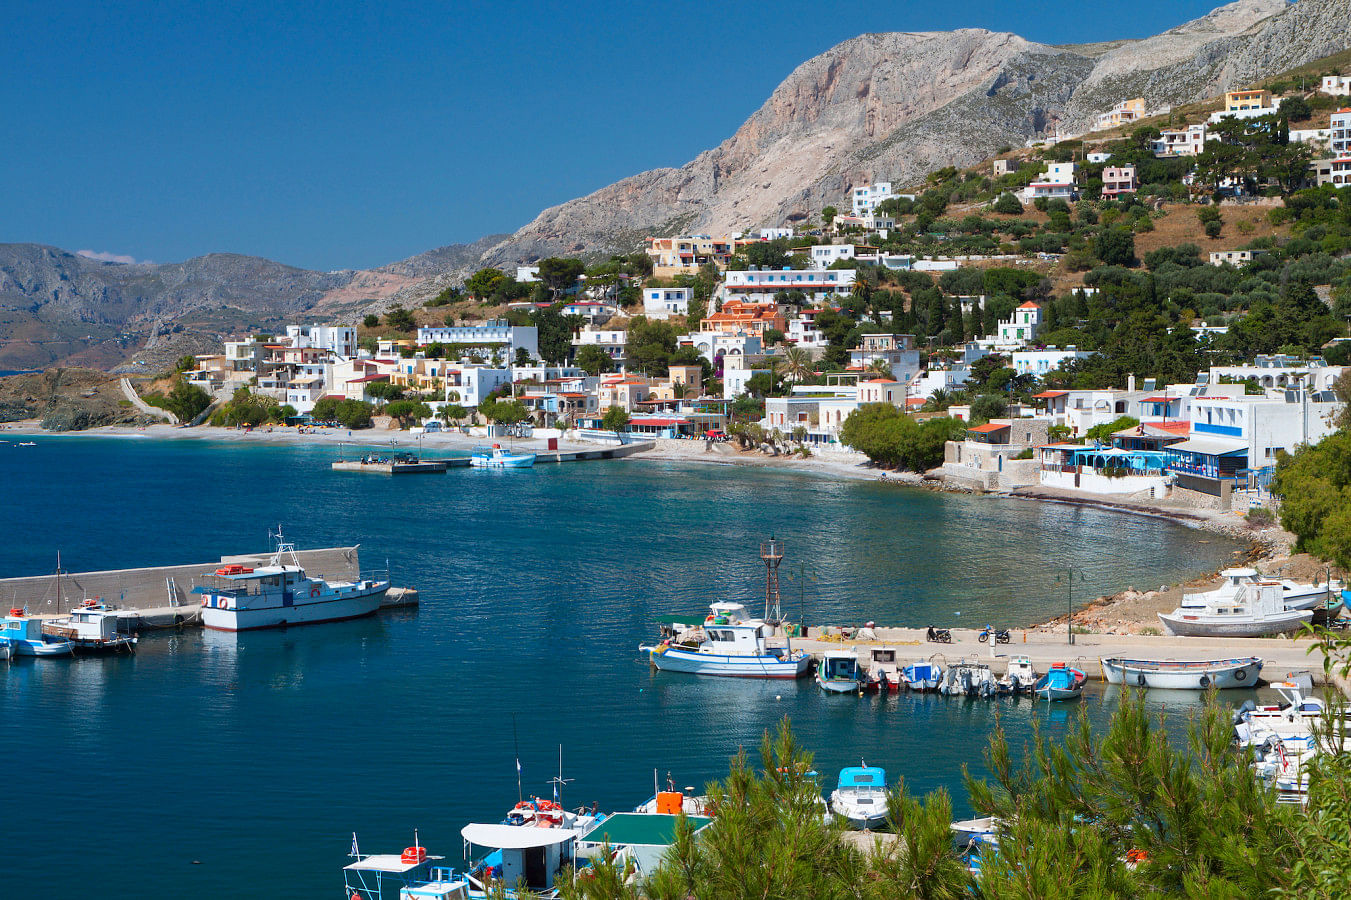 Lej en båd i Kalymnos